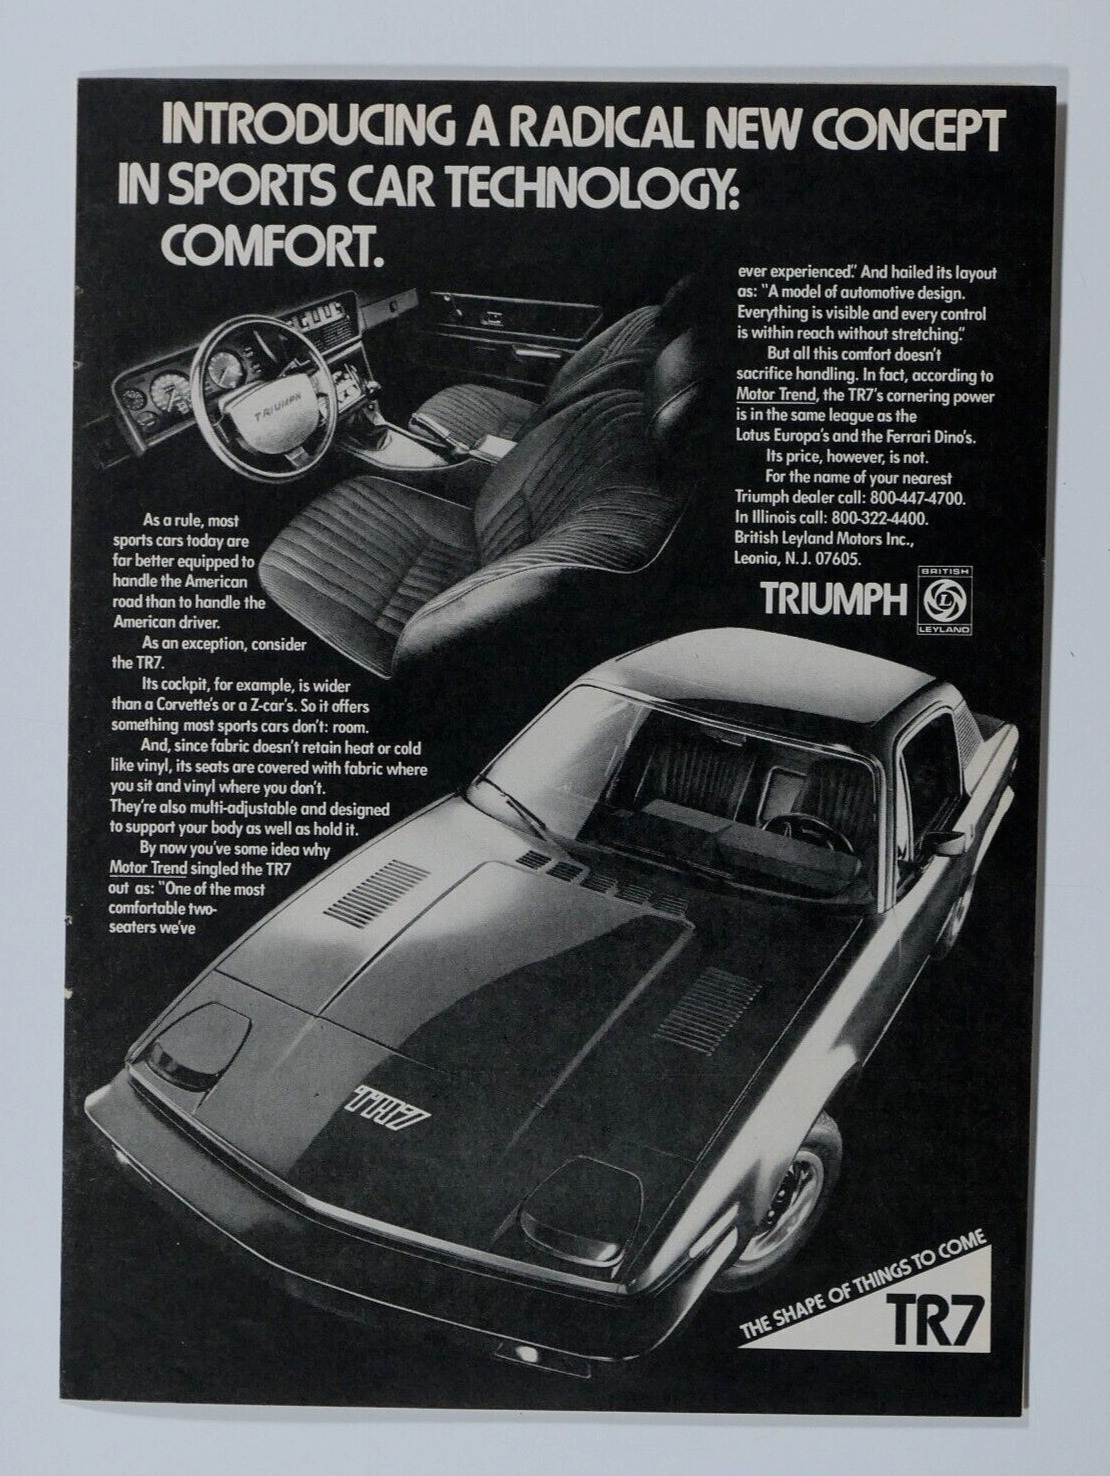 1976 Triumph TR 7 Vintage Radical New Concept Original Print Ad 8.5 x 11